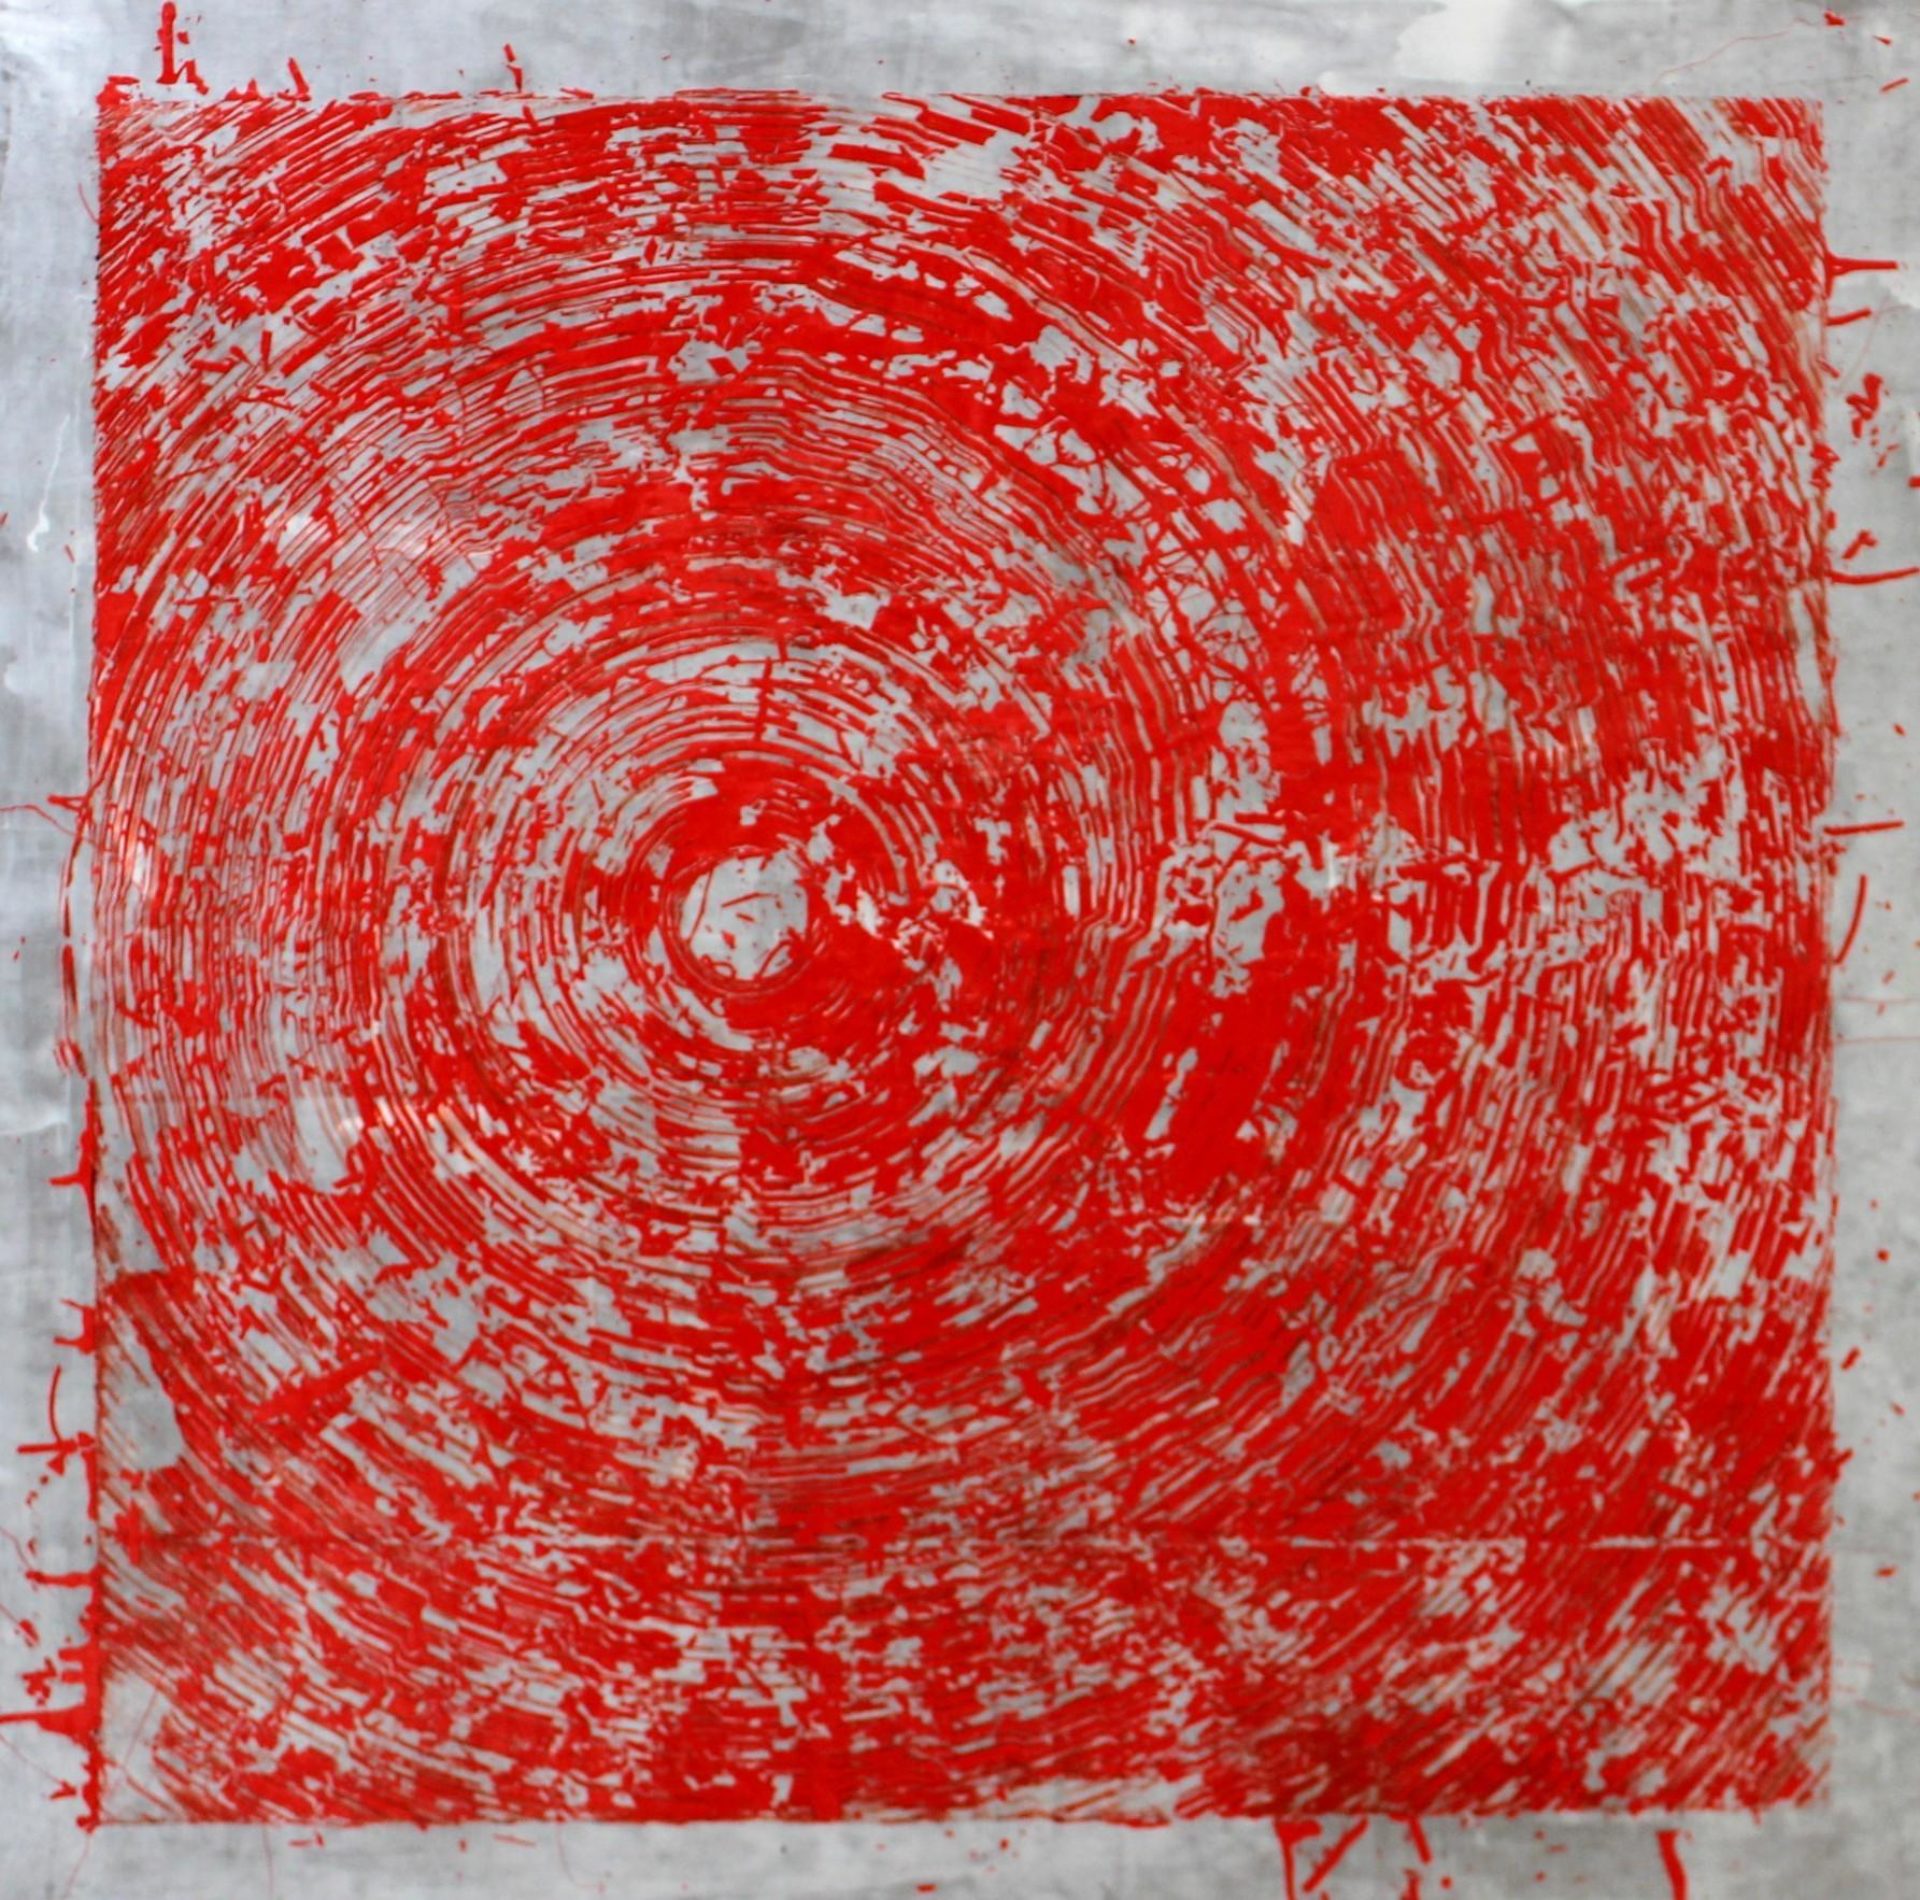 Szilárd Cseke, Red Swirl, 2015